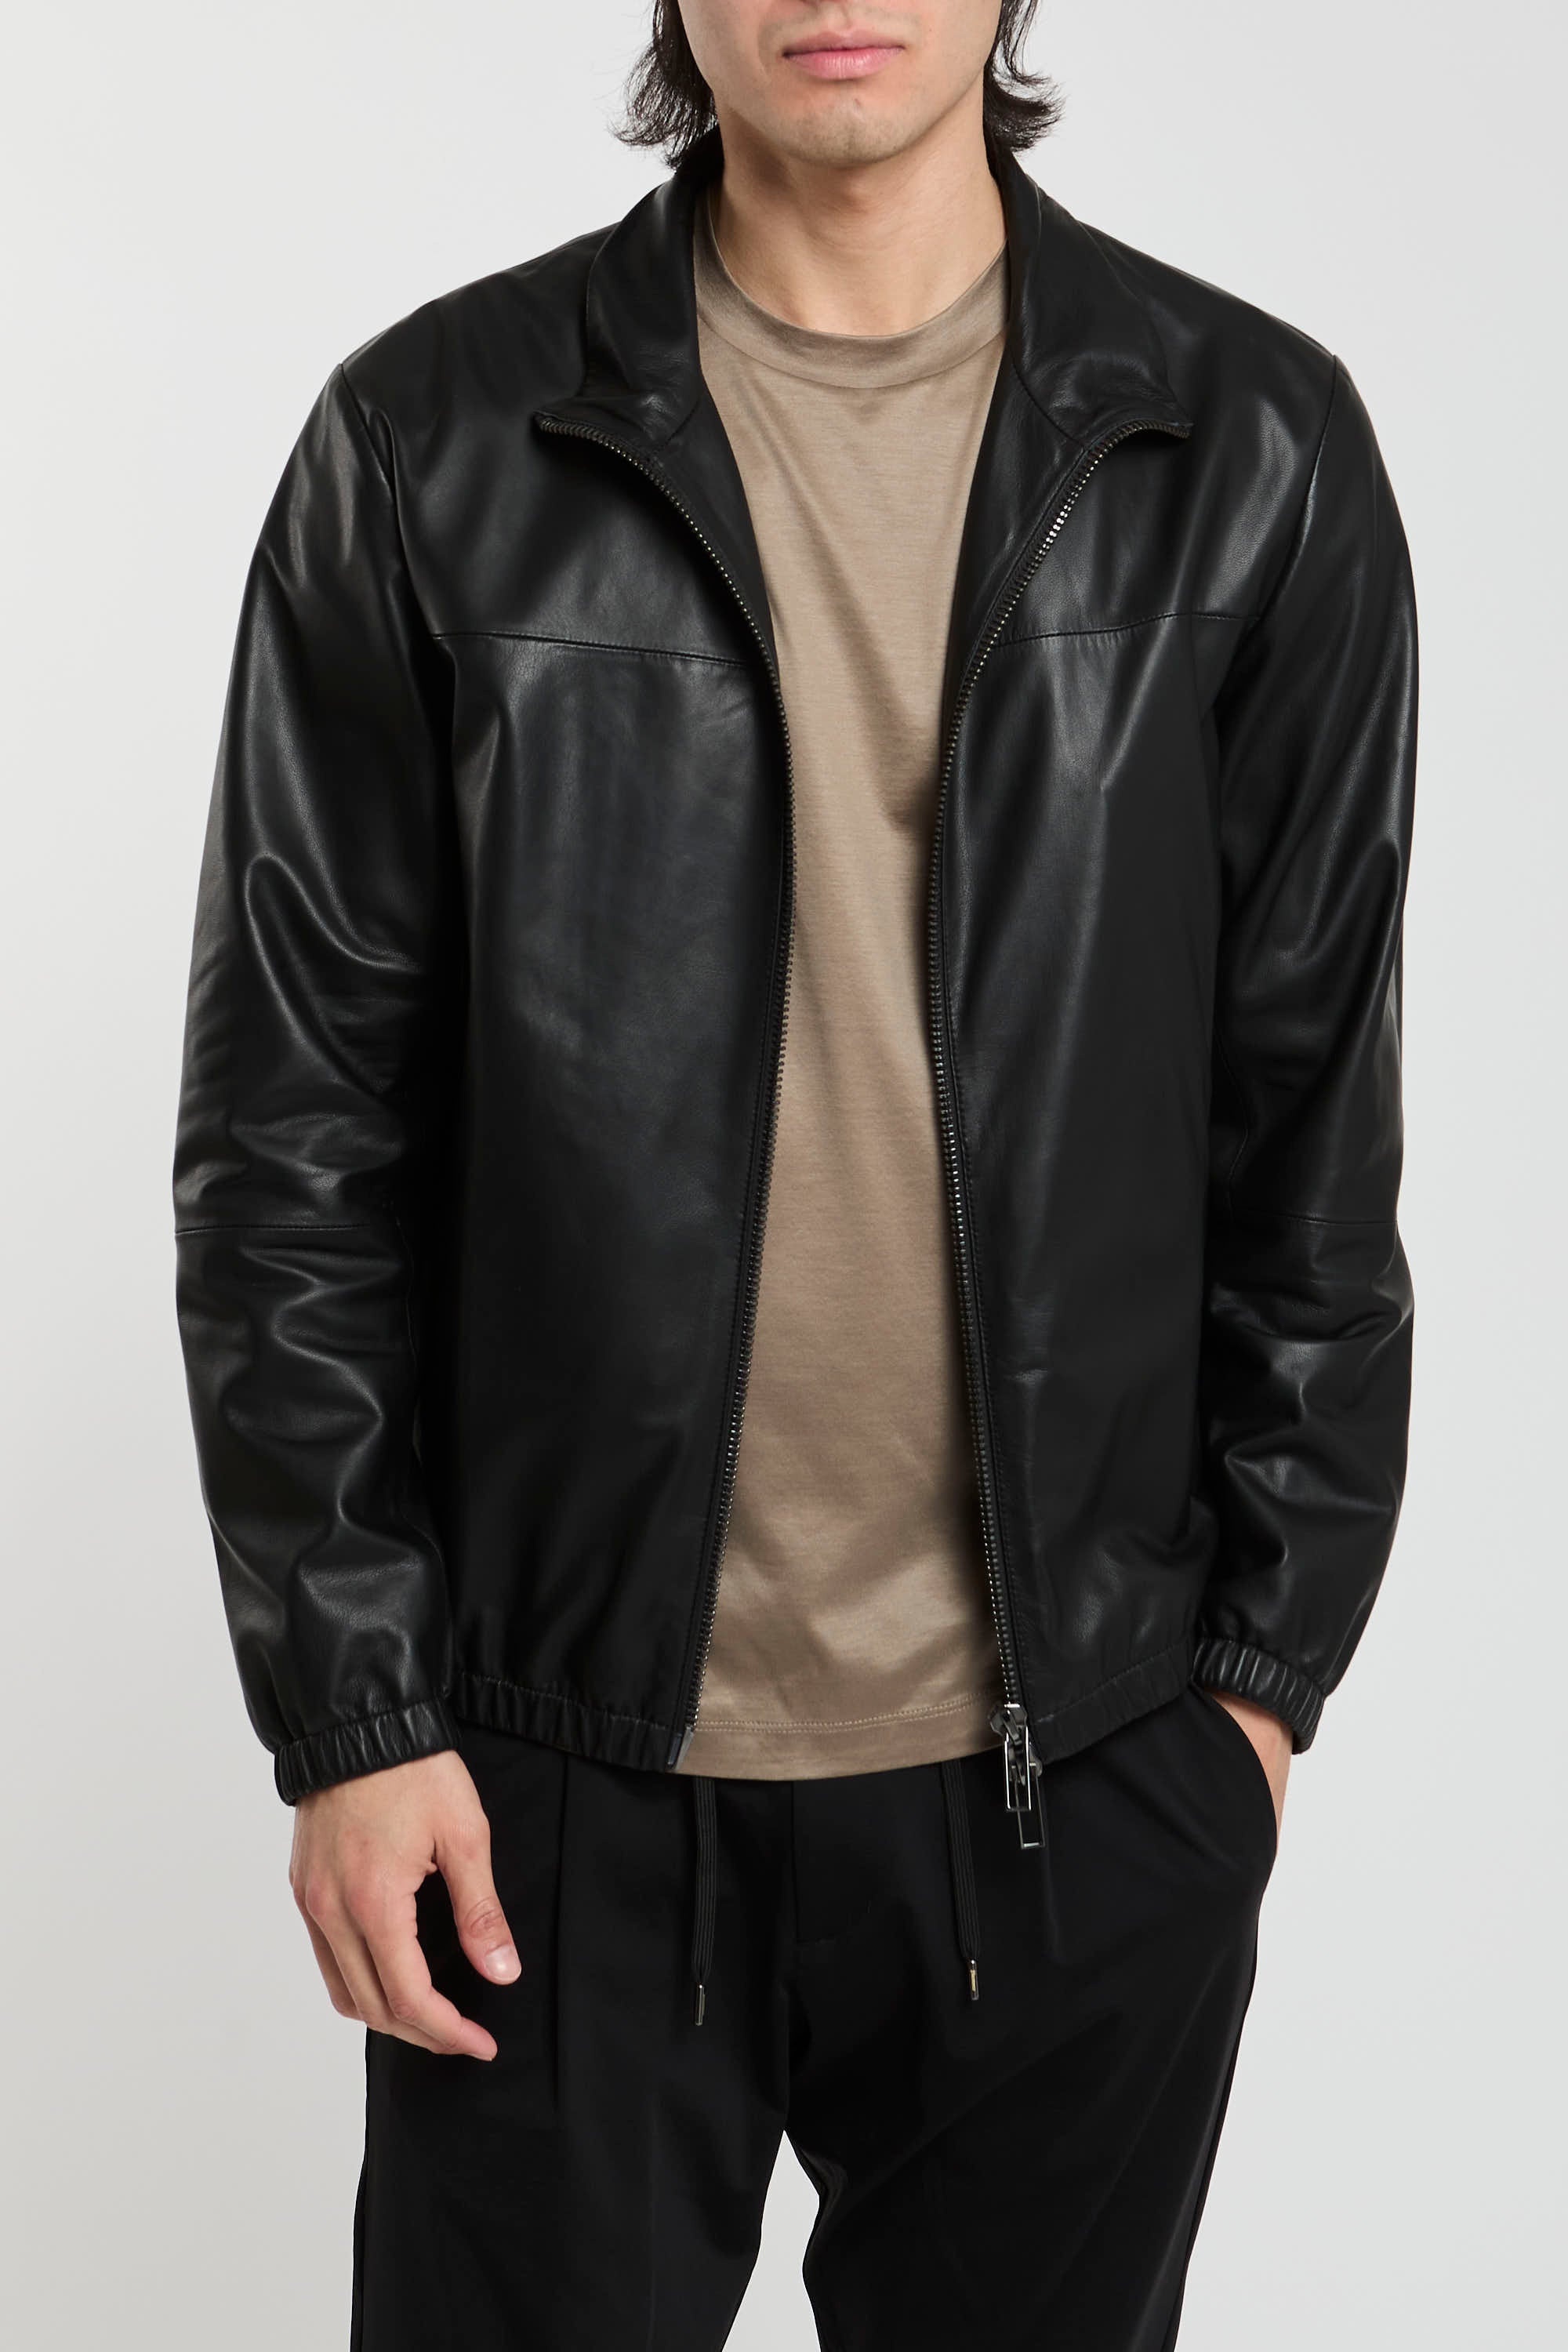 Emporio Armani Black Leather Jacket-6